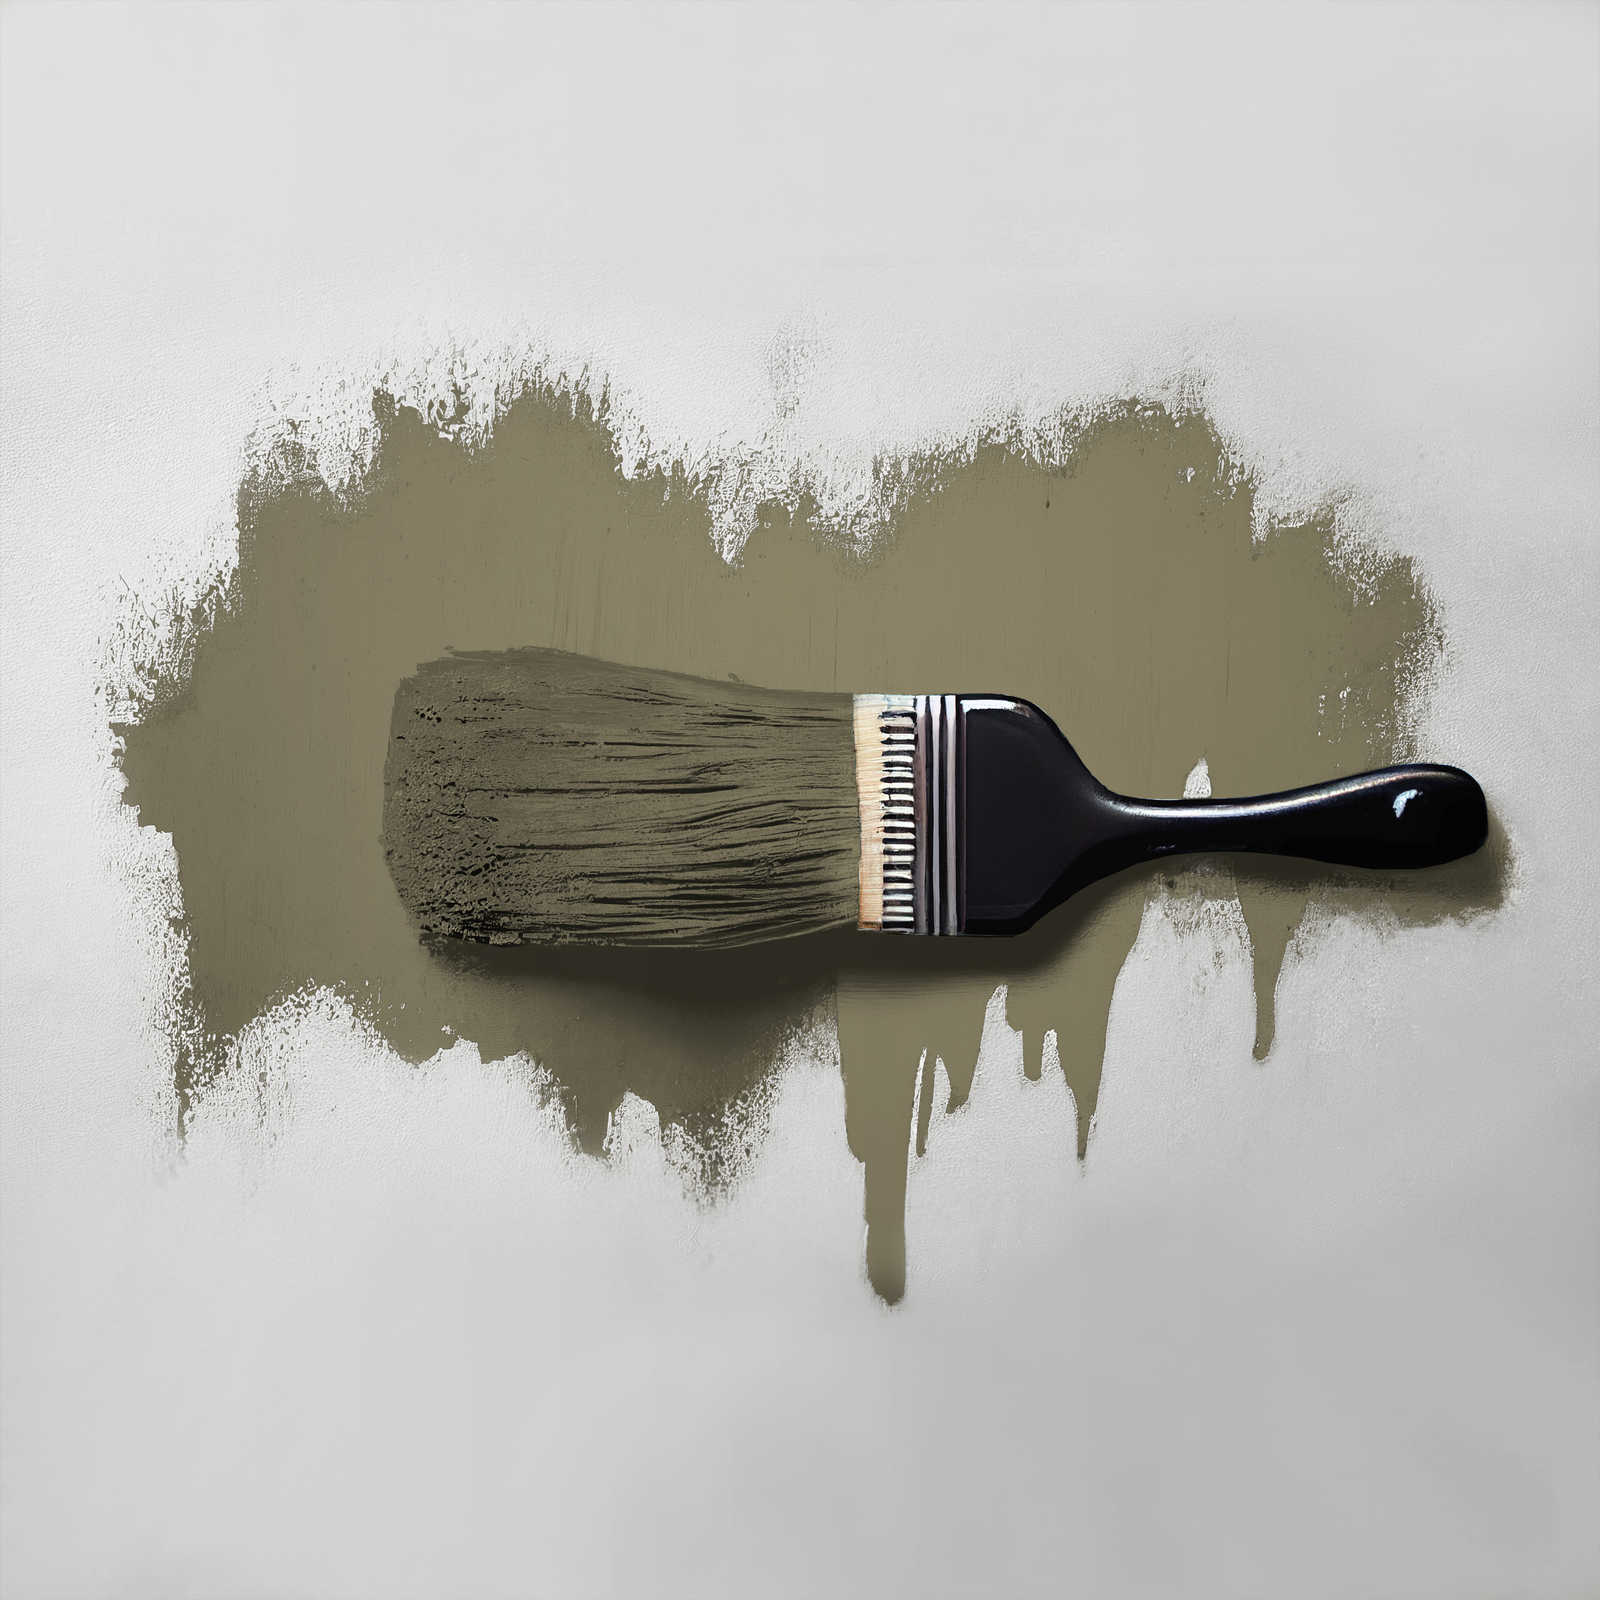             Peinture murale TCK4013 »Ordinary Olive« en ton olive intense – 2,5 litres
        